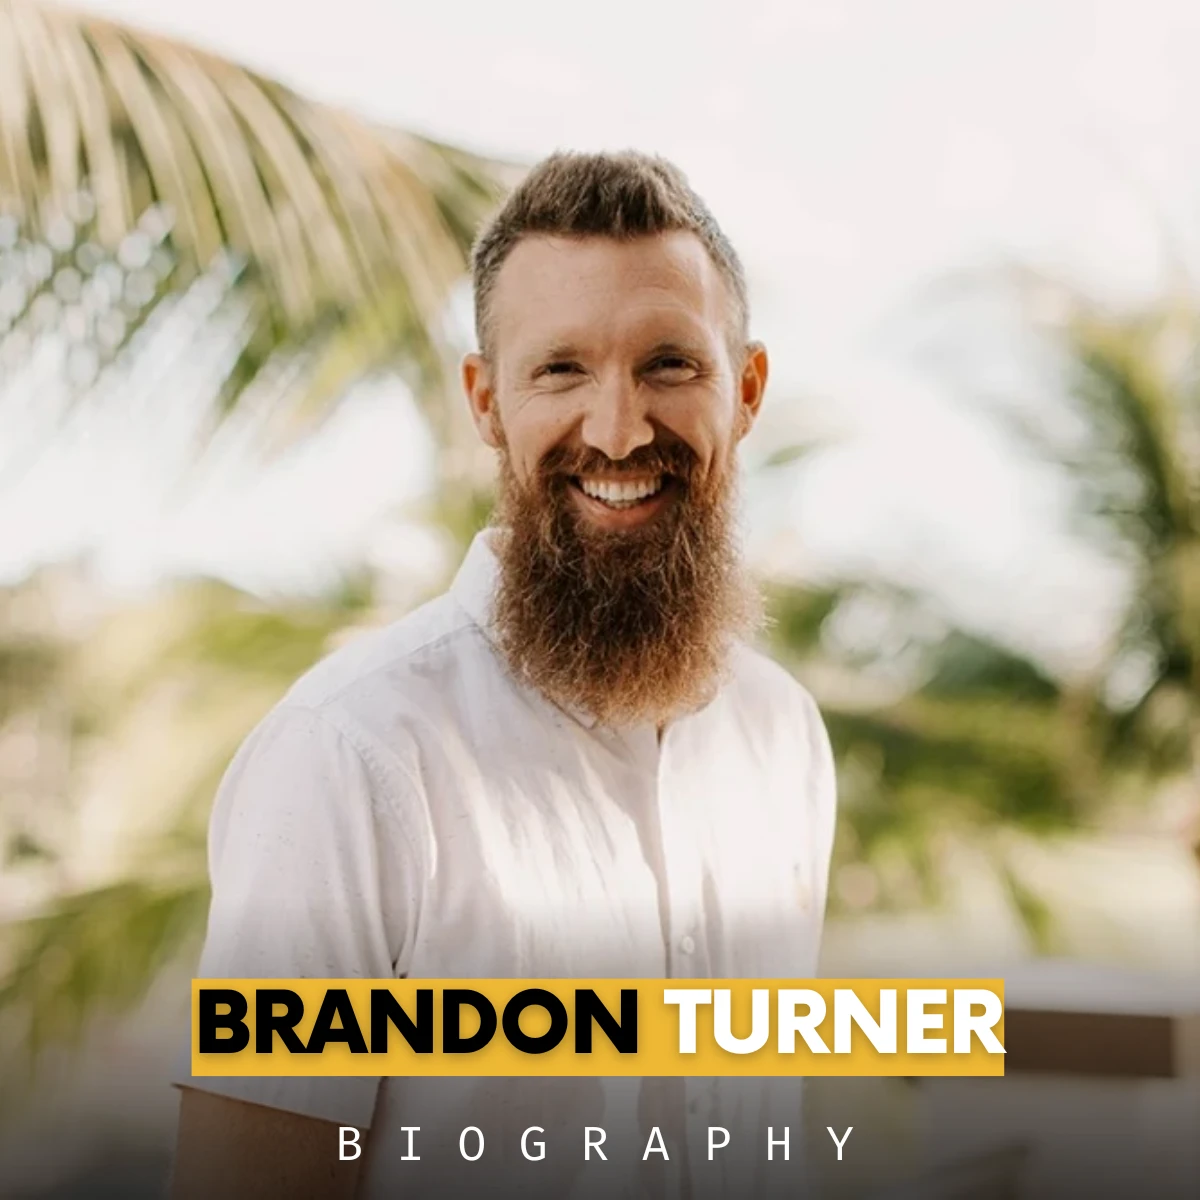 Brandon turner biography